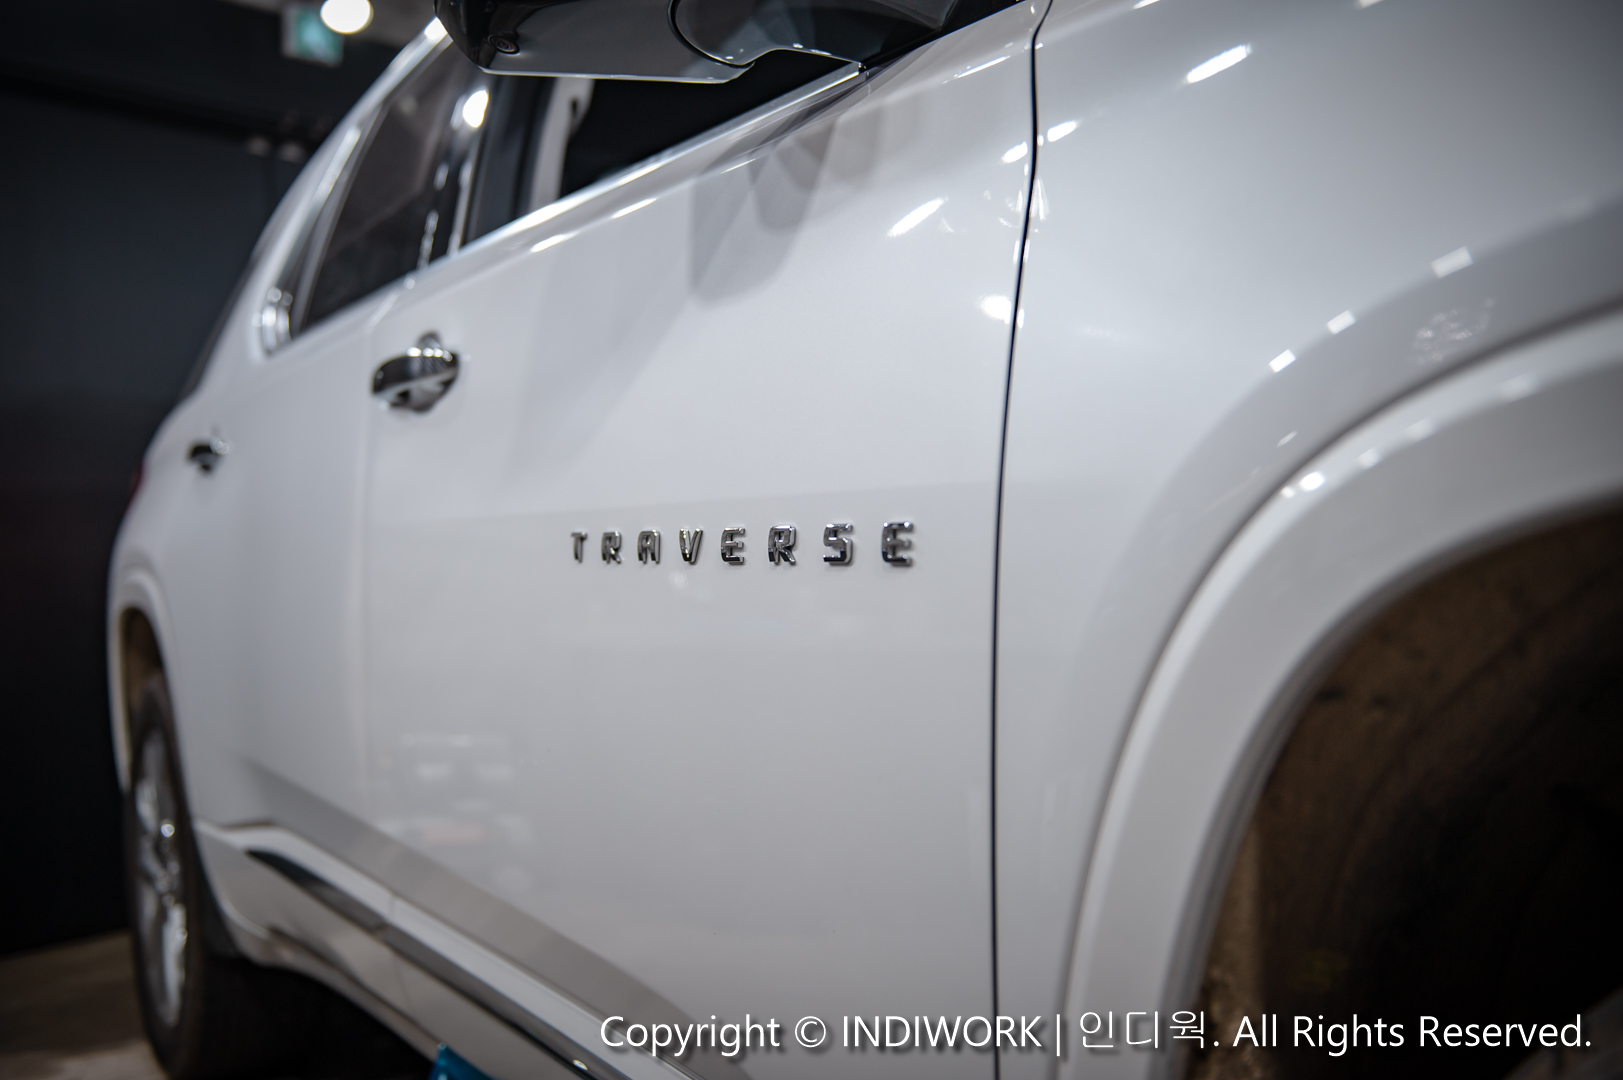 2019 Chevrolet Traverse exterior